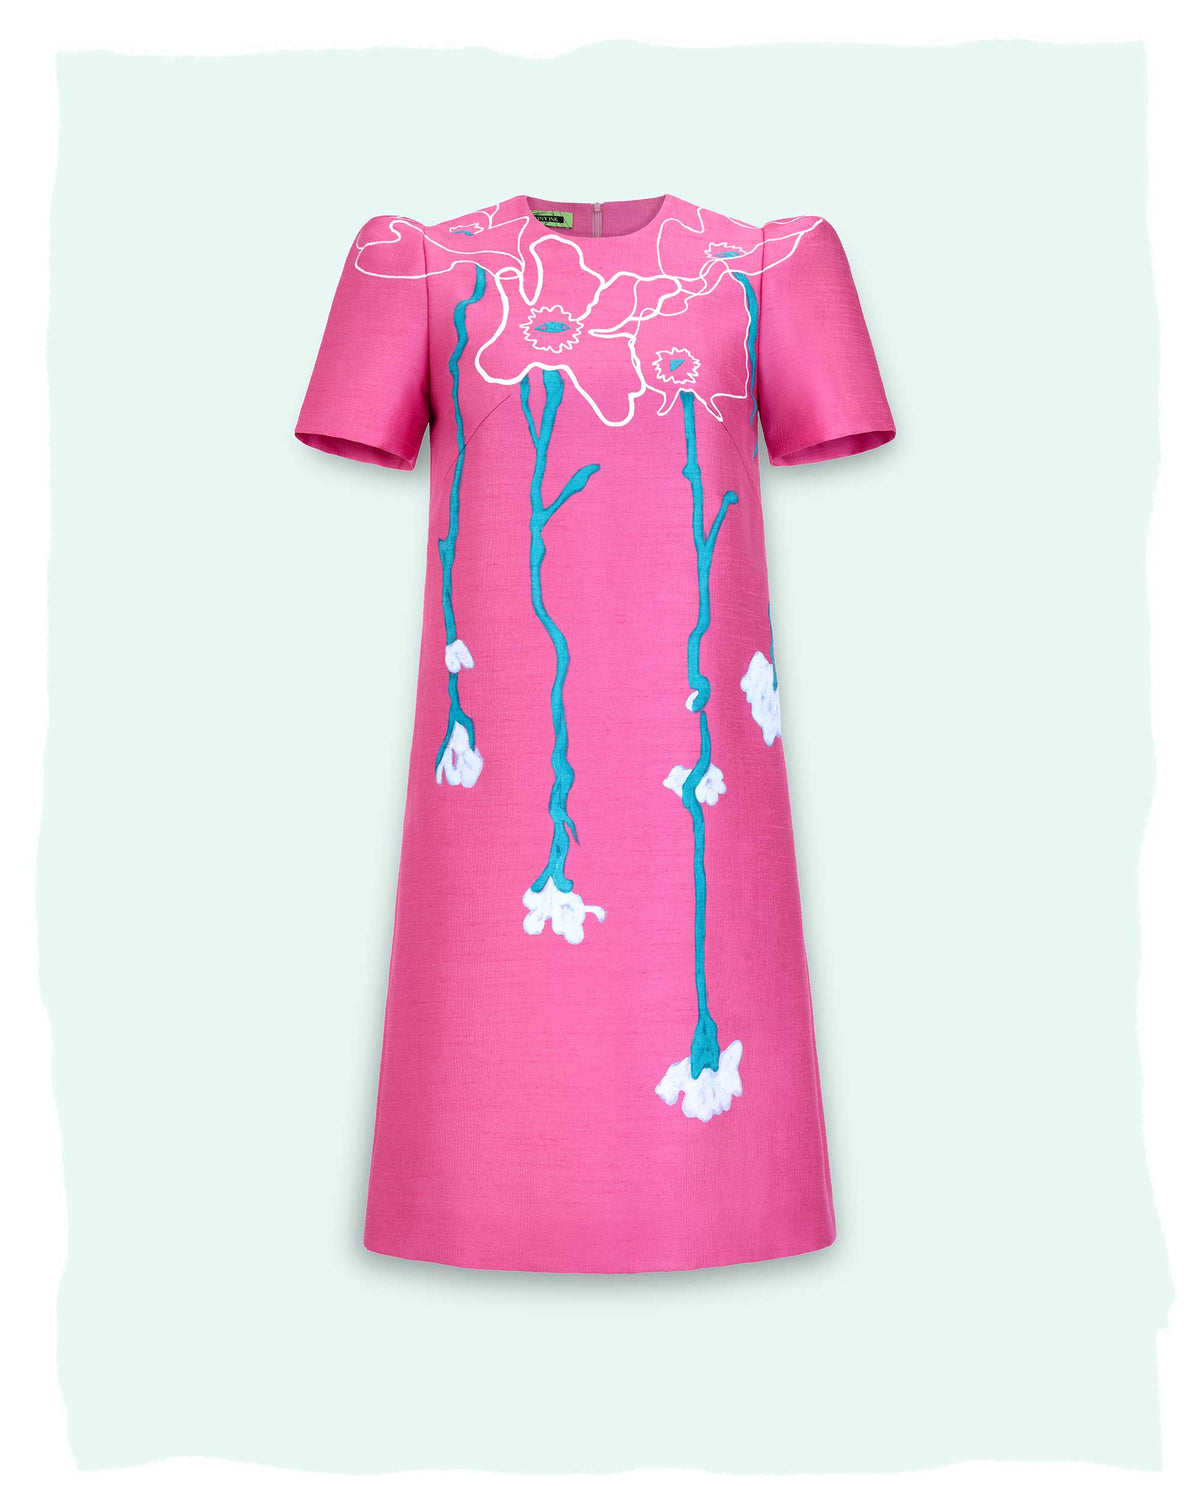 Inside Flowers - Tucked Sleeves Thulian Pink Mini Dress